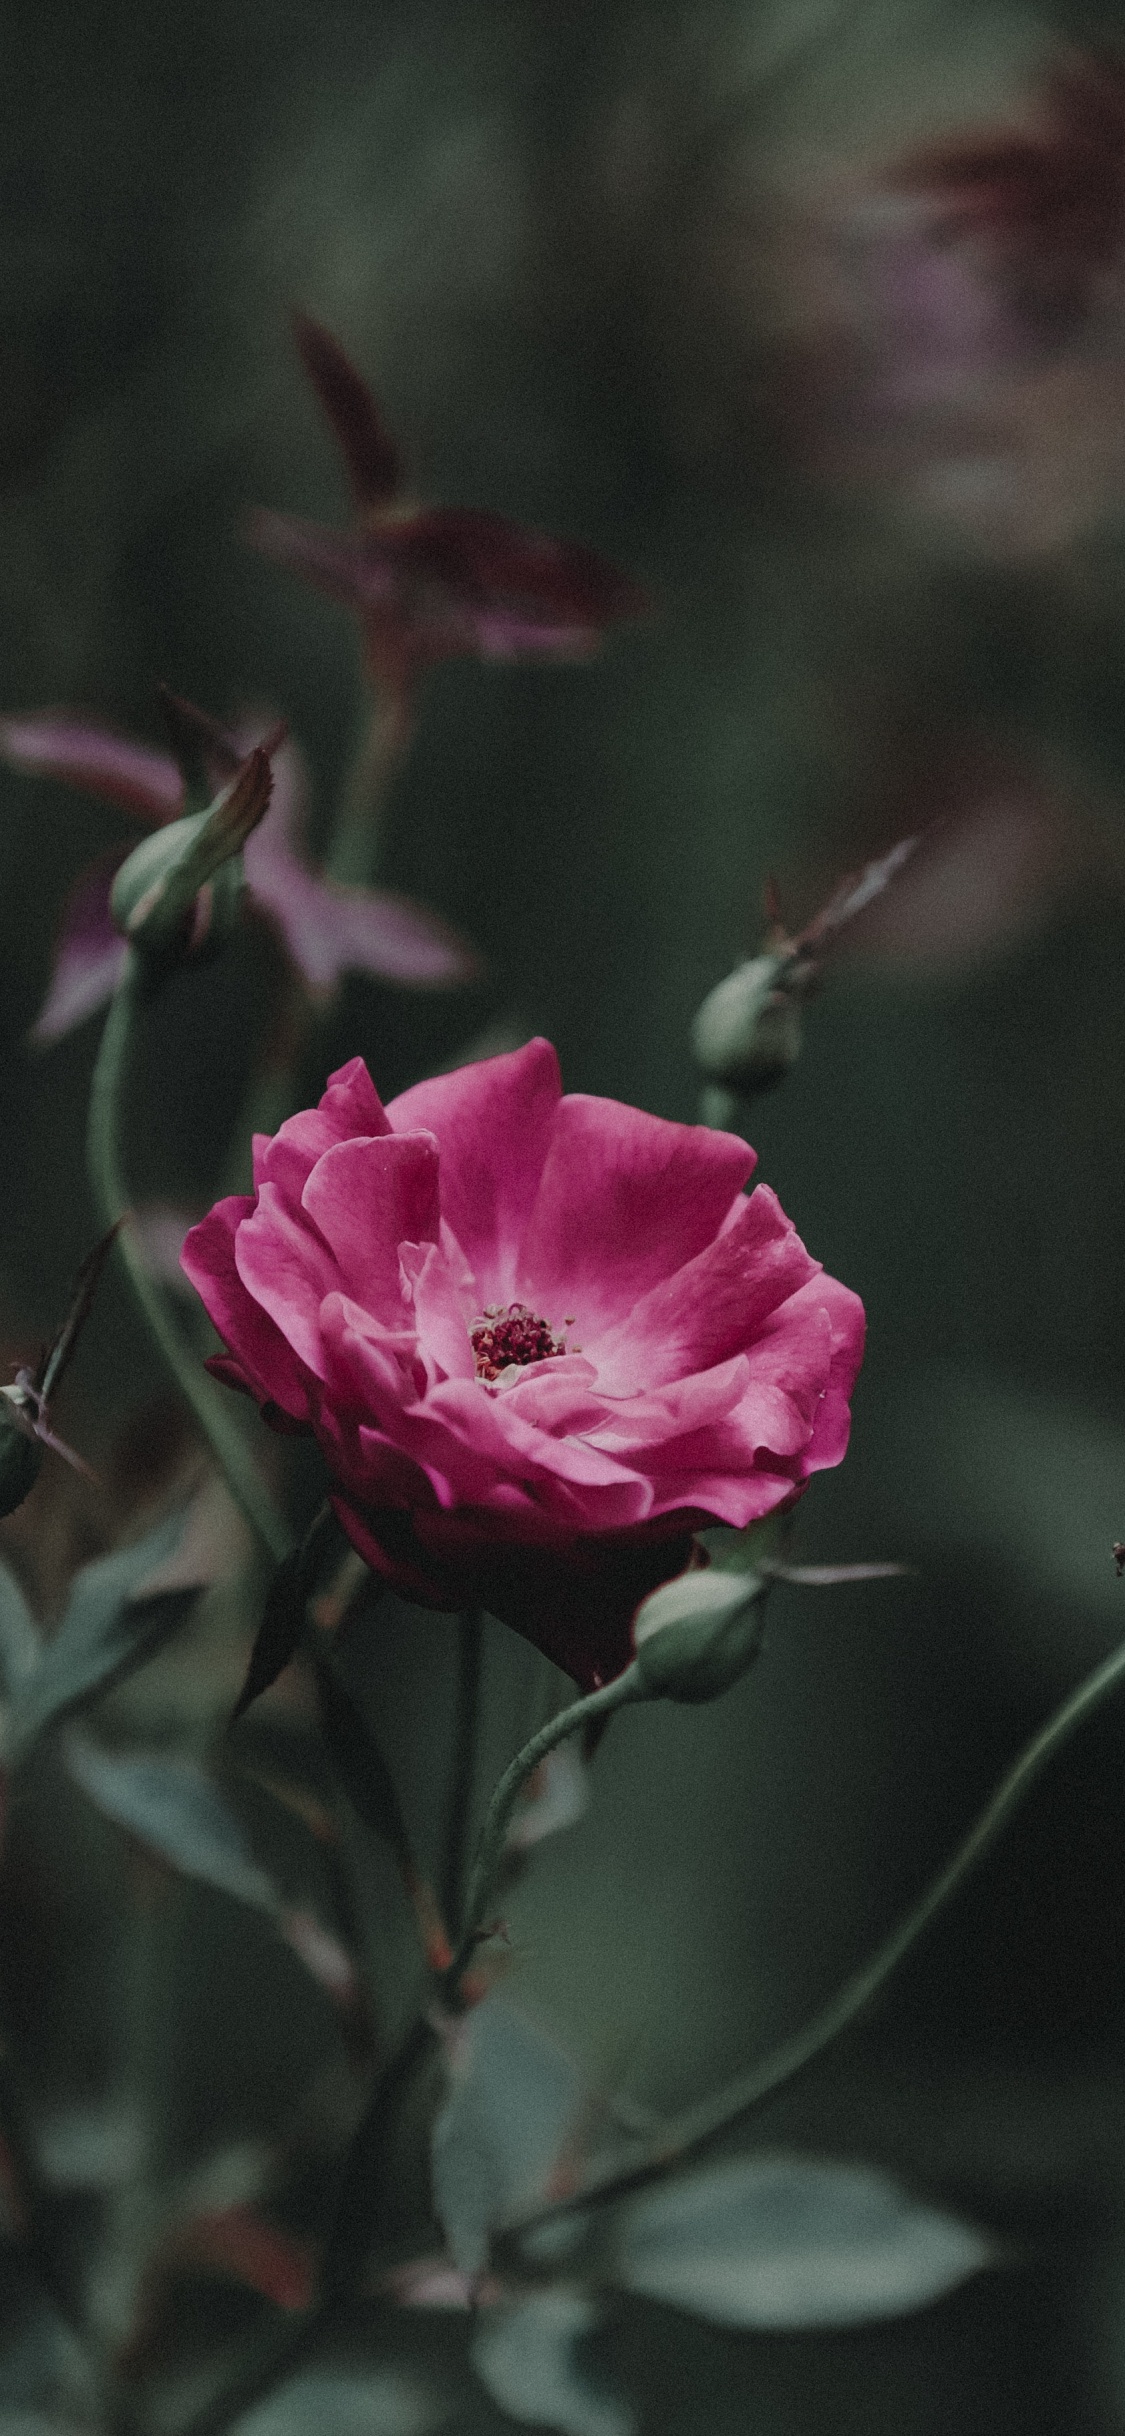 Rose Rose en Fleurs Pendant la Journée. Wallpaper in 1125x2436 Resolution